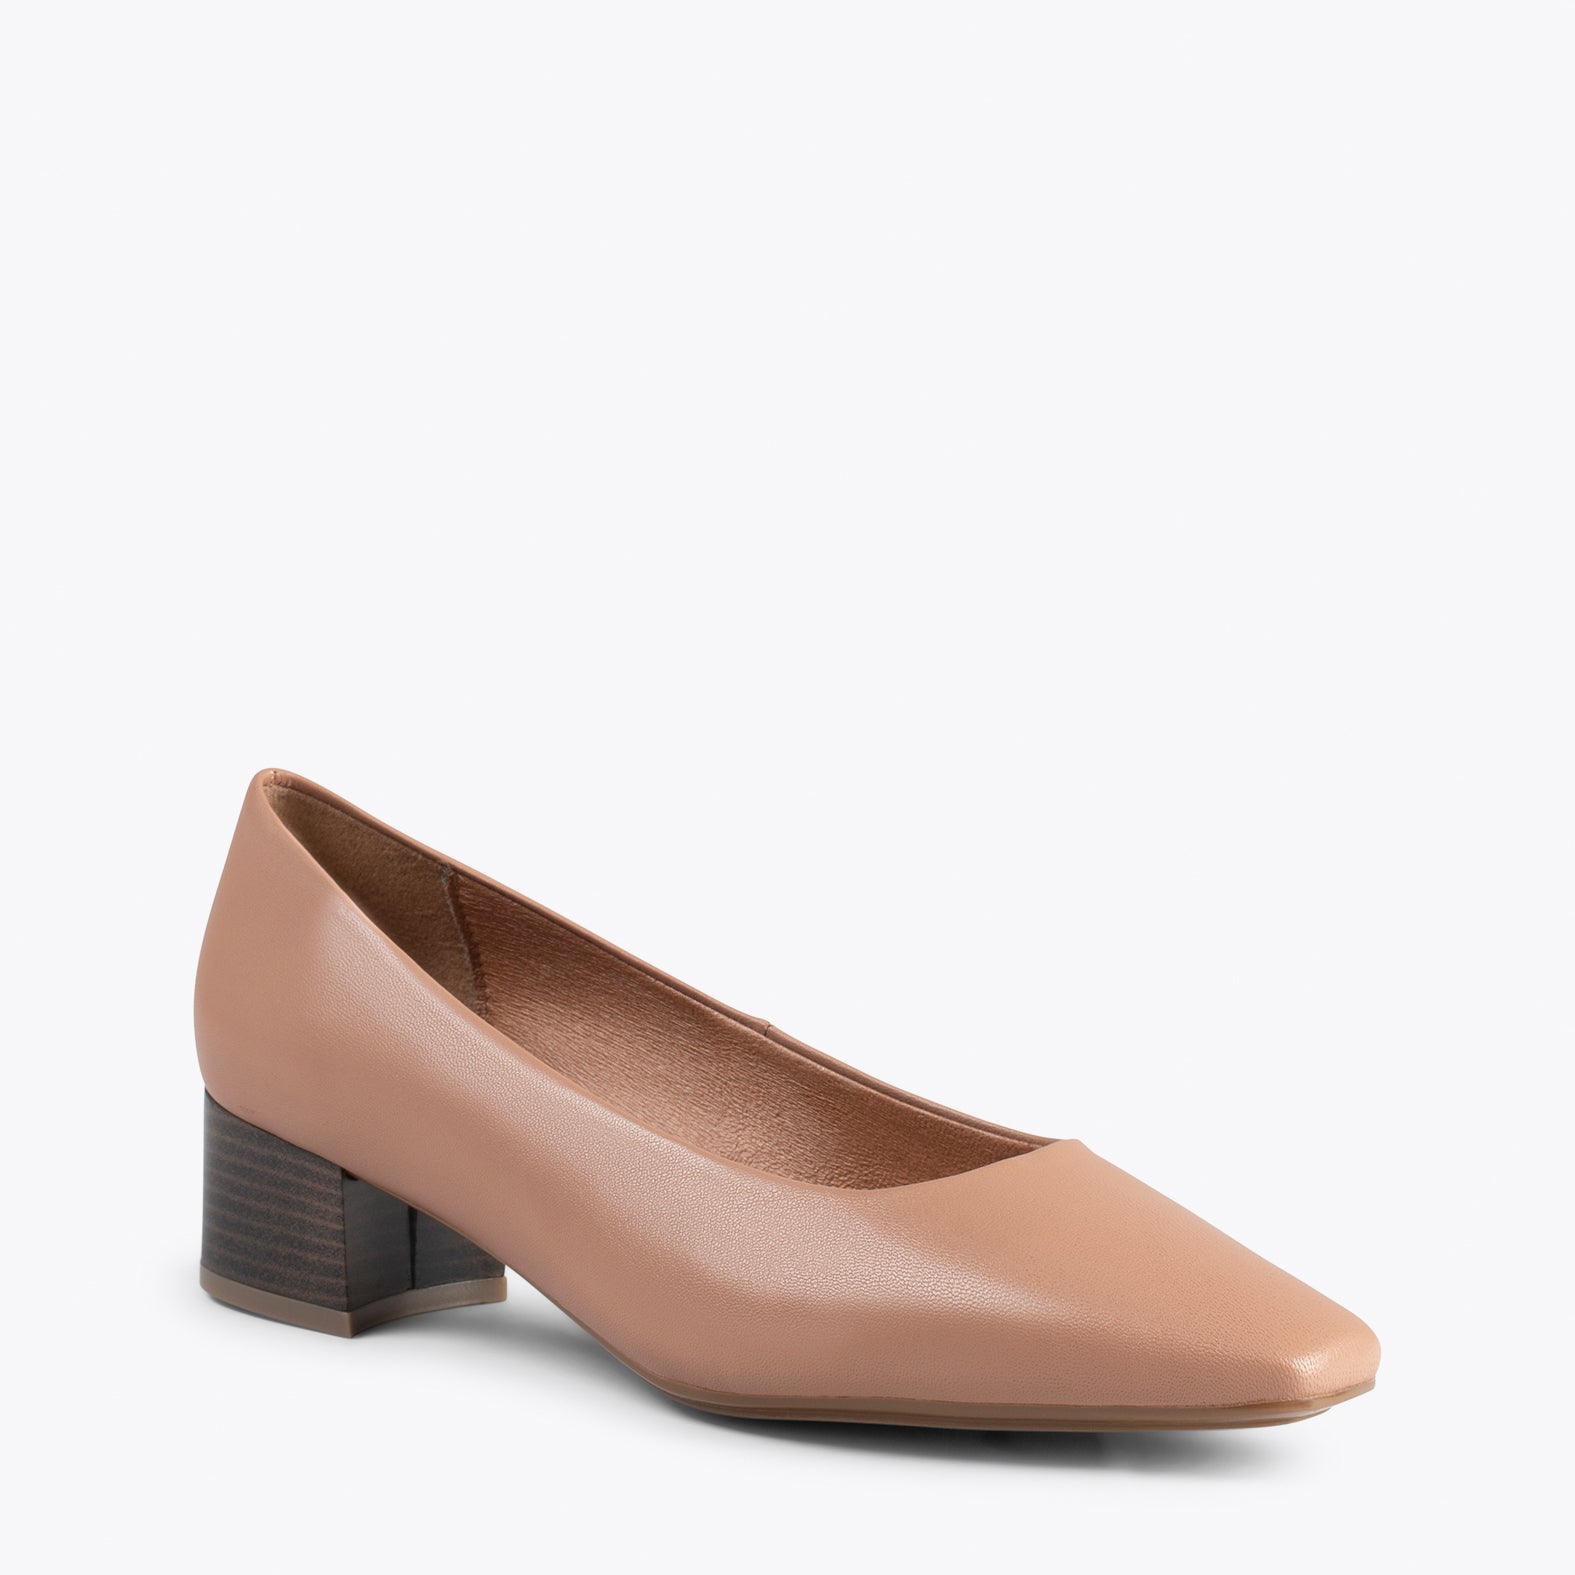 URBAN LADY – NUDE nappa leather low heels